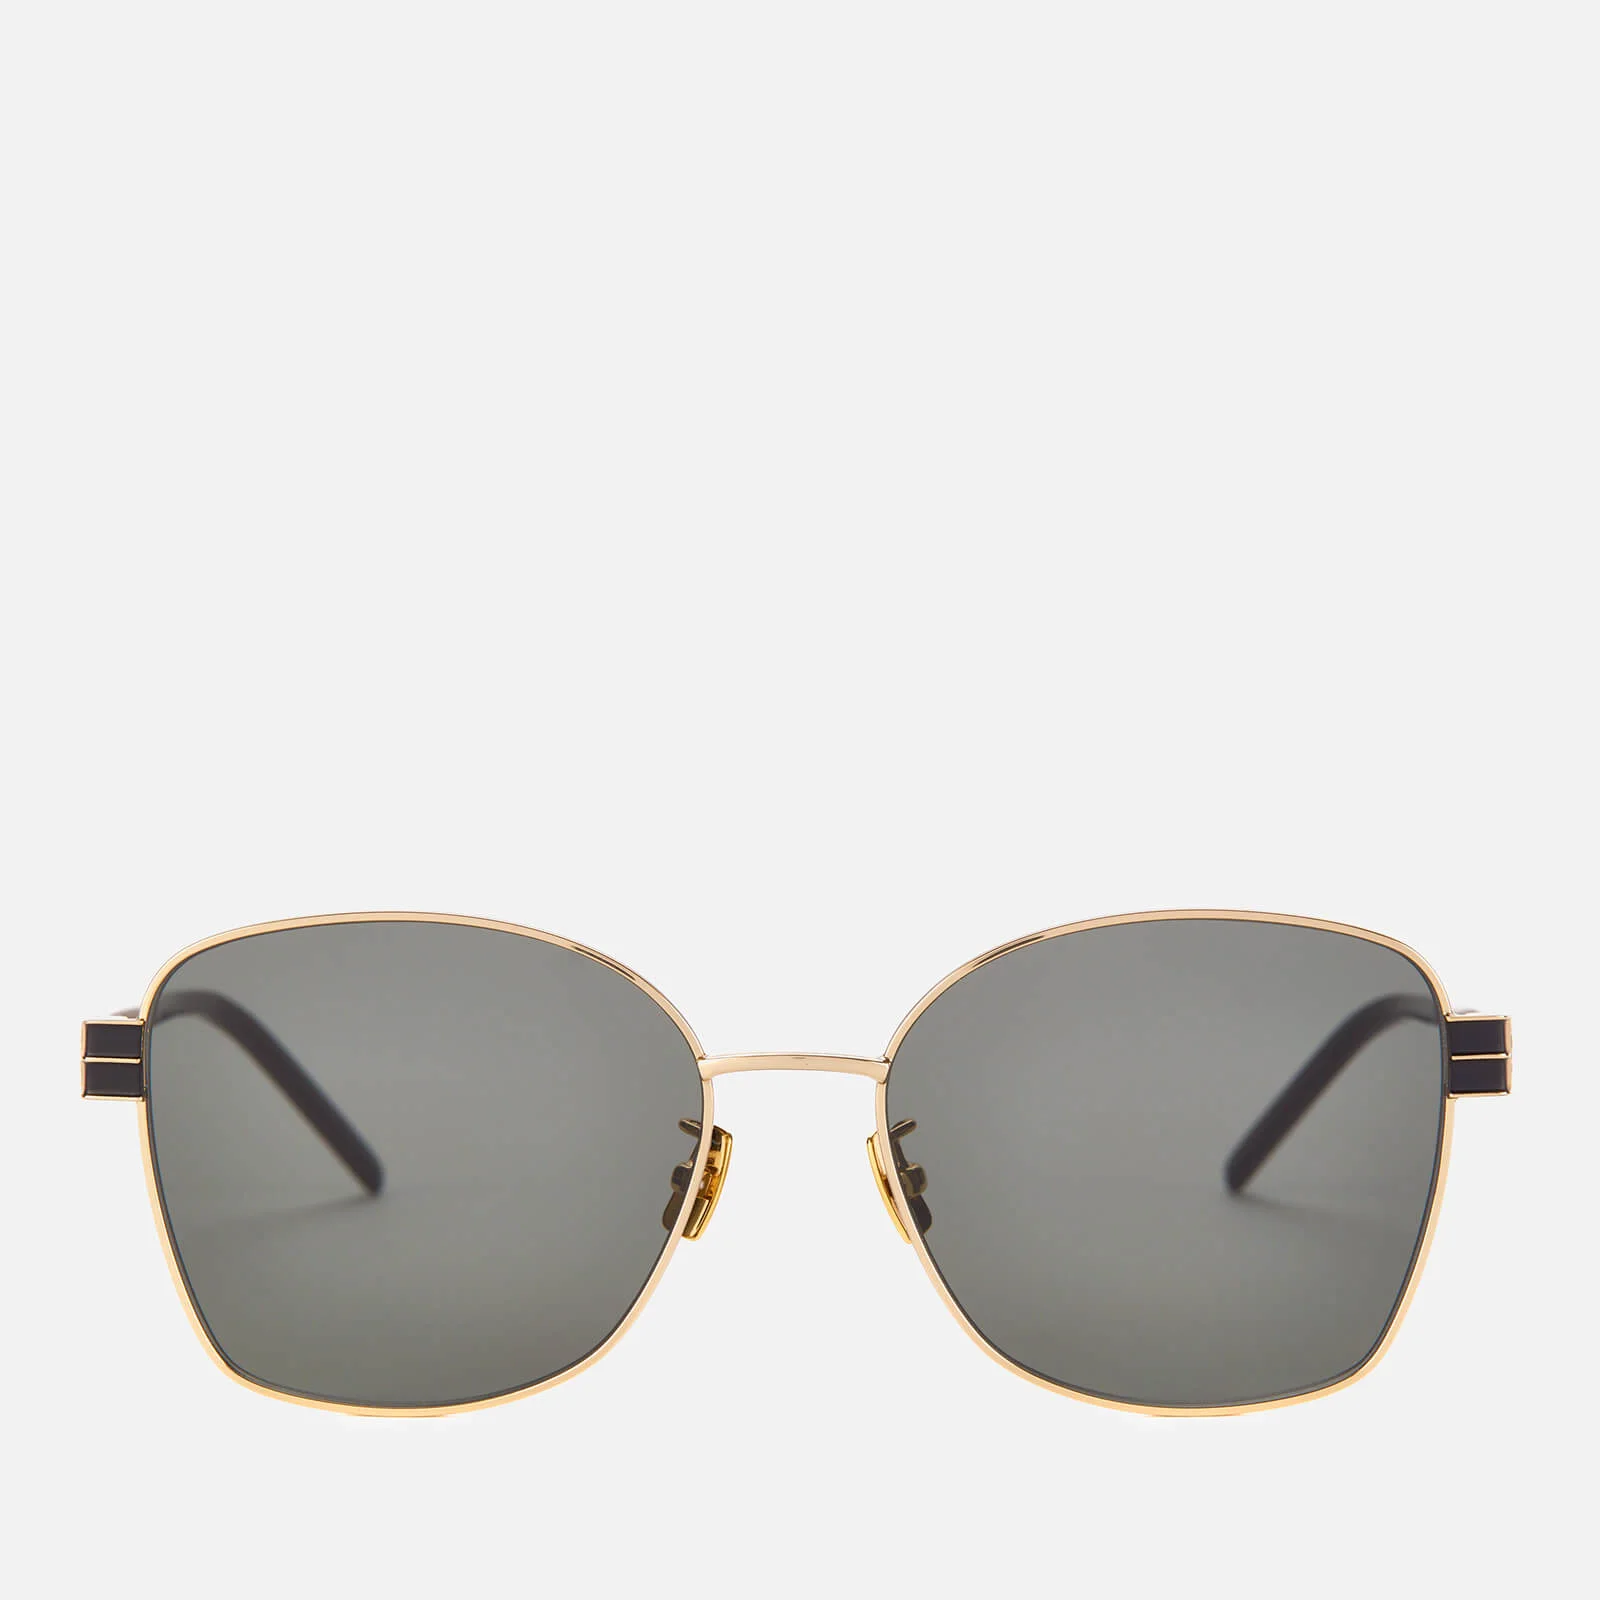 Saint Laurent Women's Square Metal Frame Sunglasses - Gold/Grey Image 1